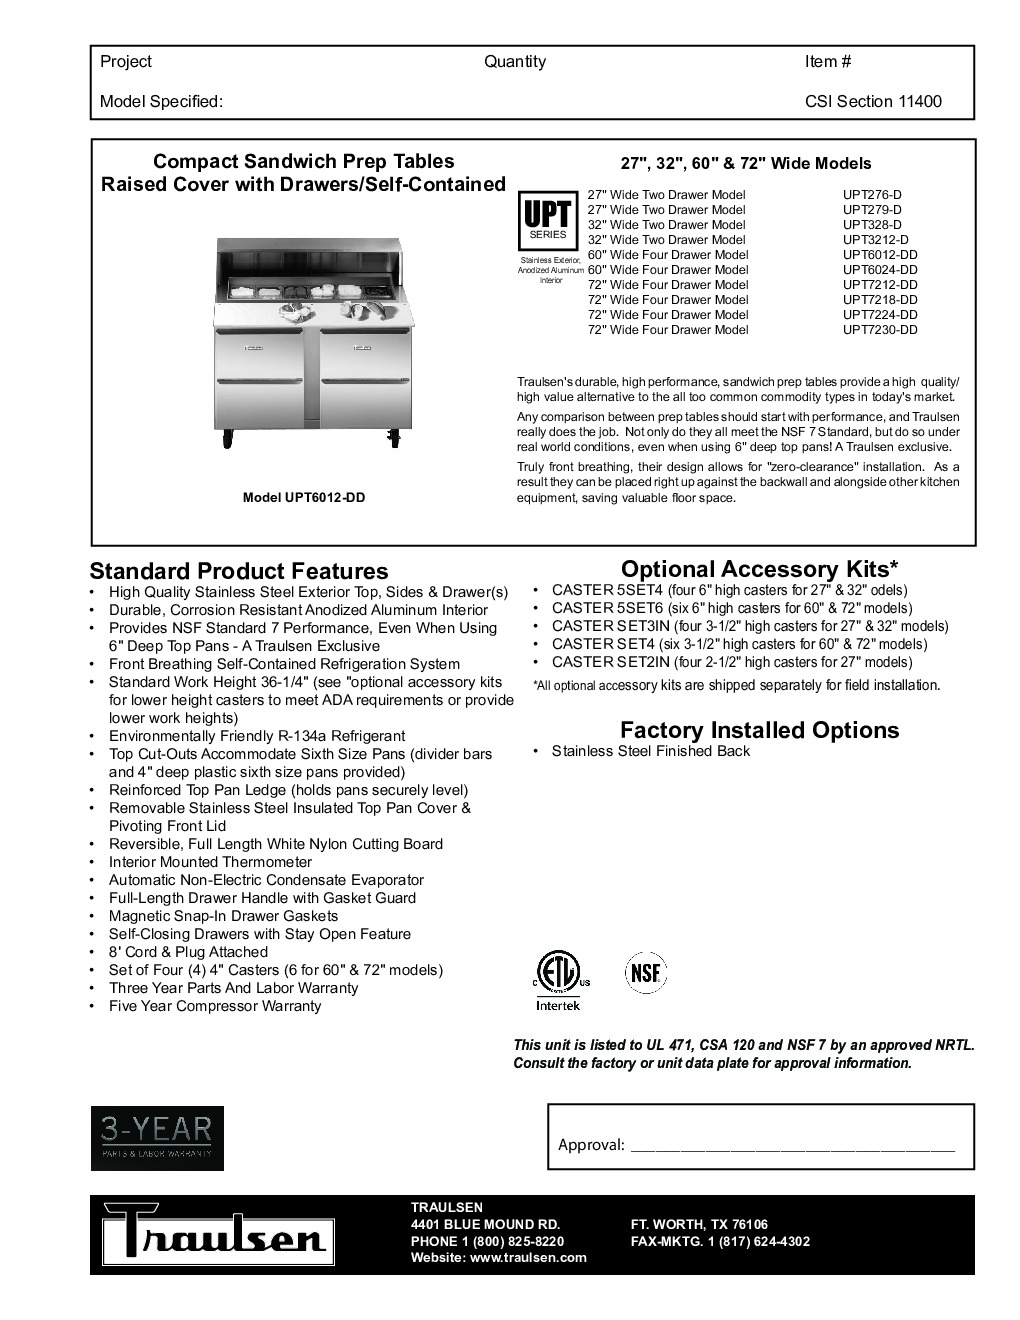 Traulsen UPT7212-DD Sandwich / Salad Unit Refrigerated Counter